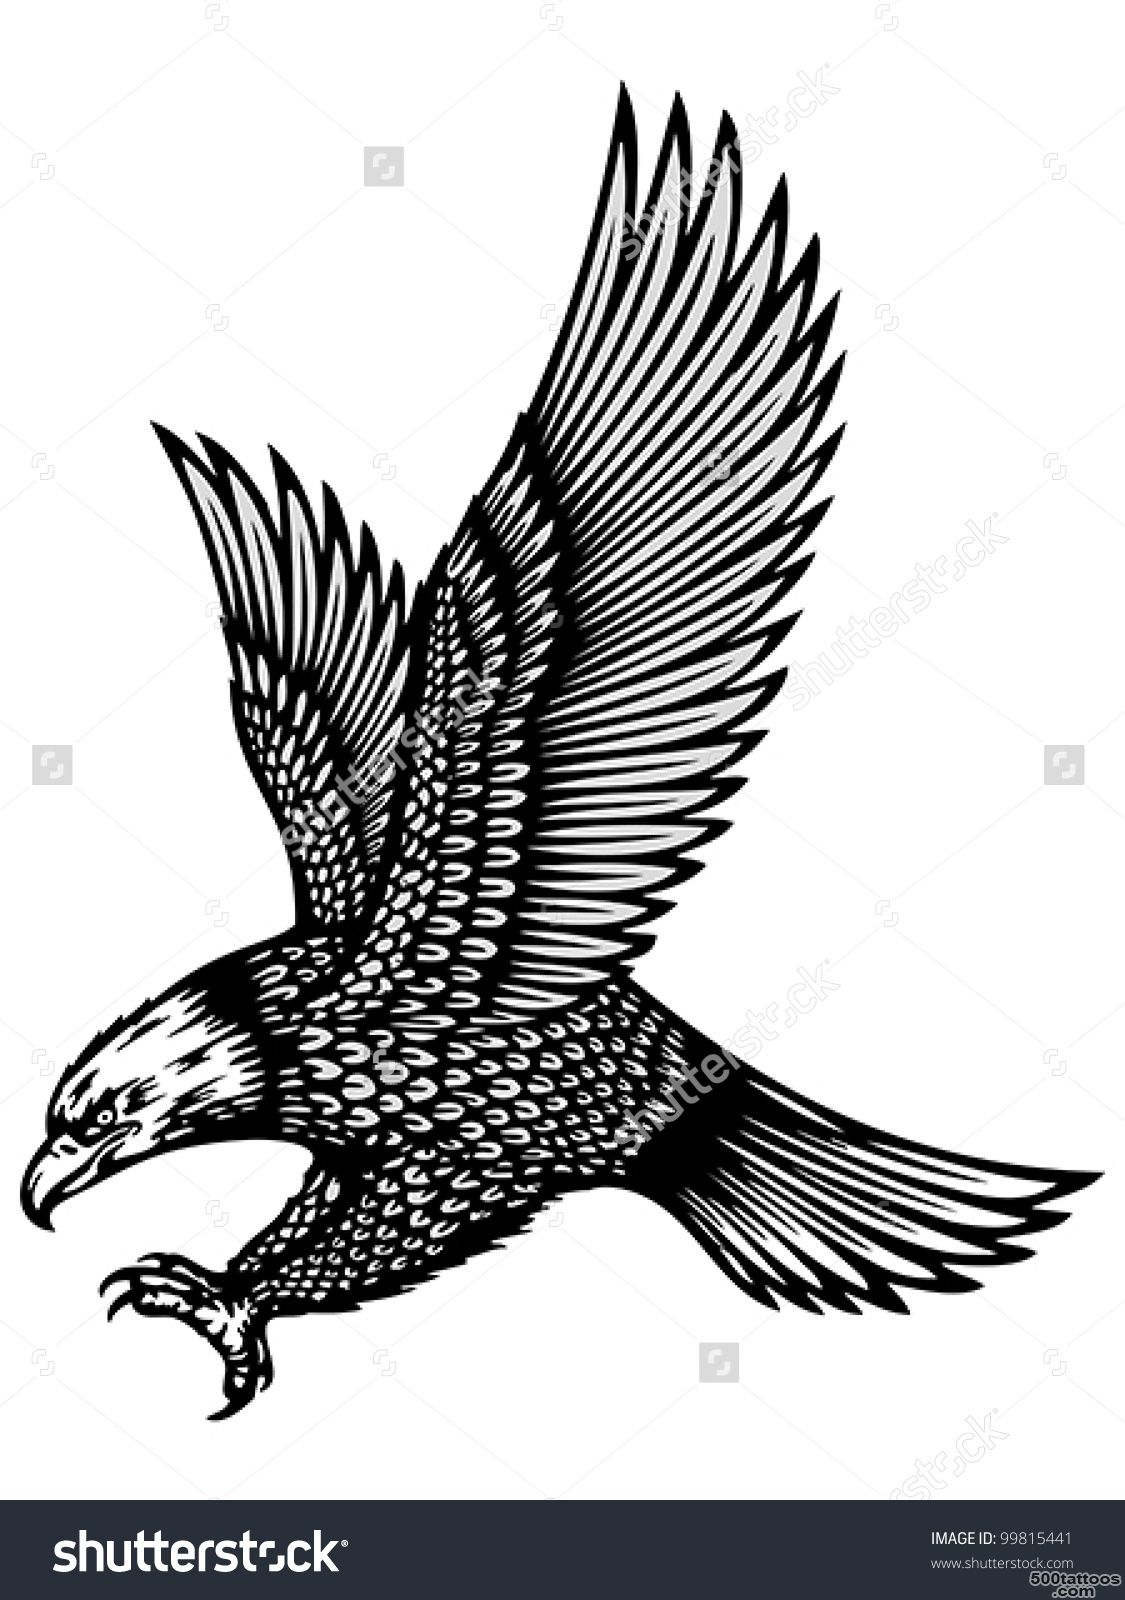 Attacking Eagle Tattoo Stock Vector Illustration 99815441 ..._42